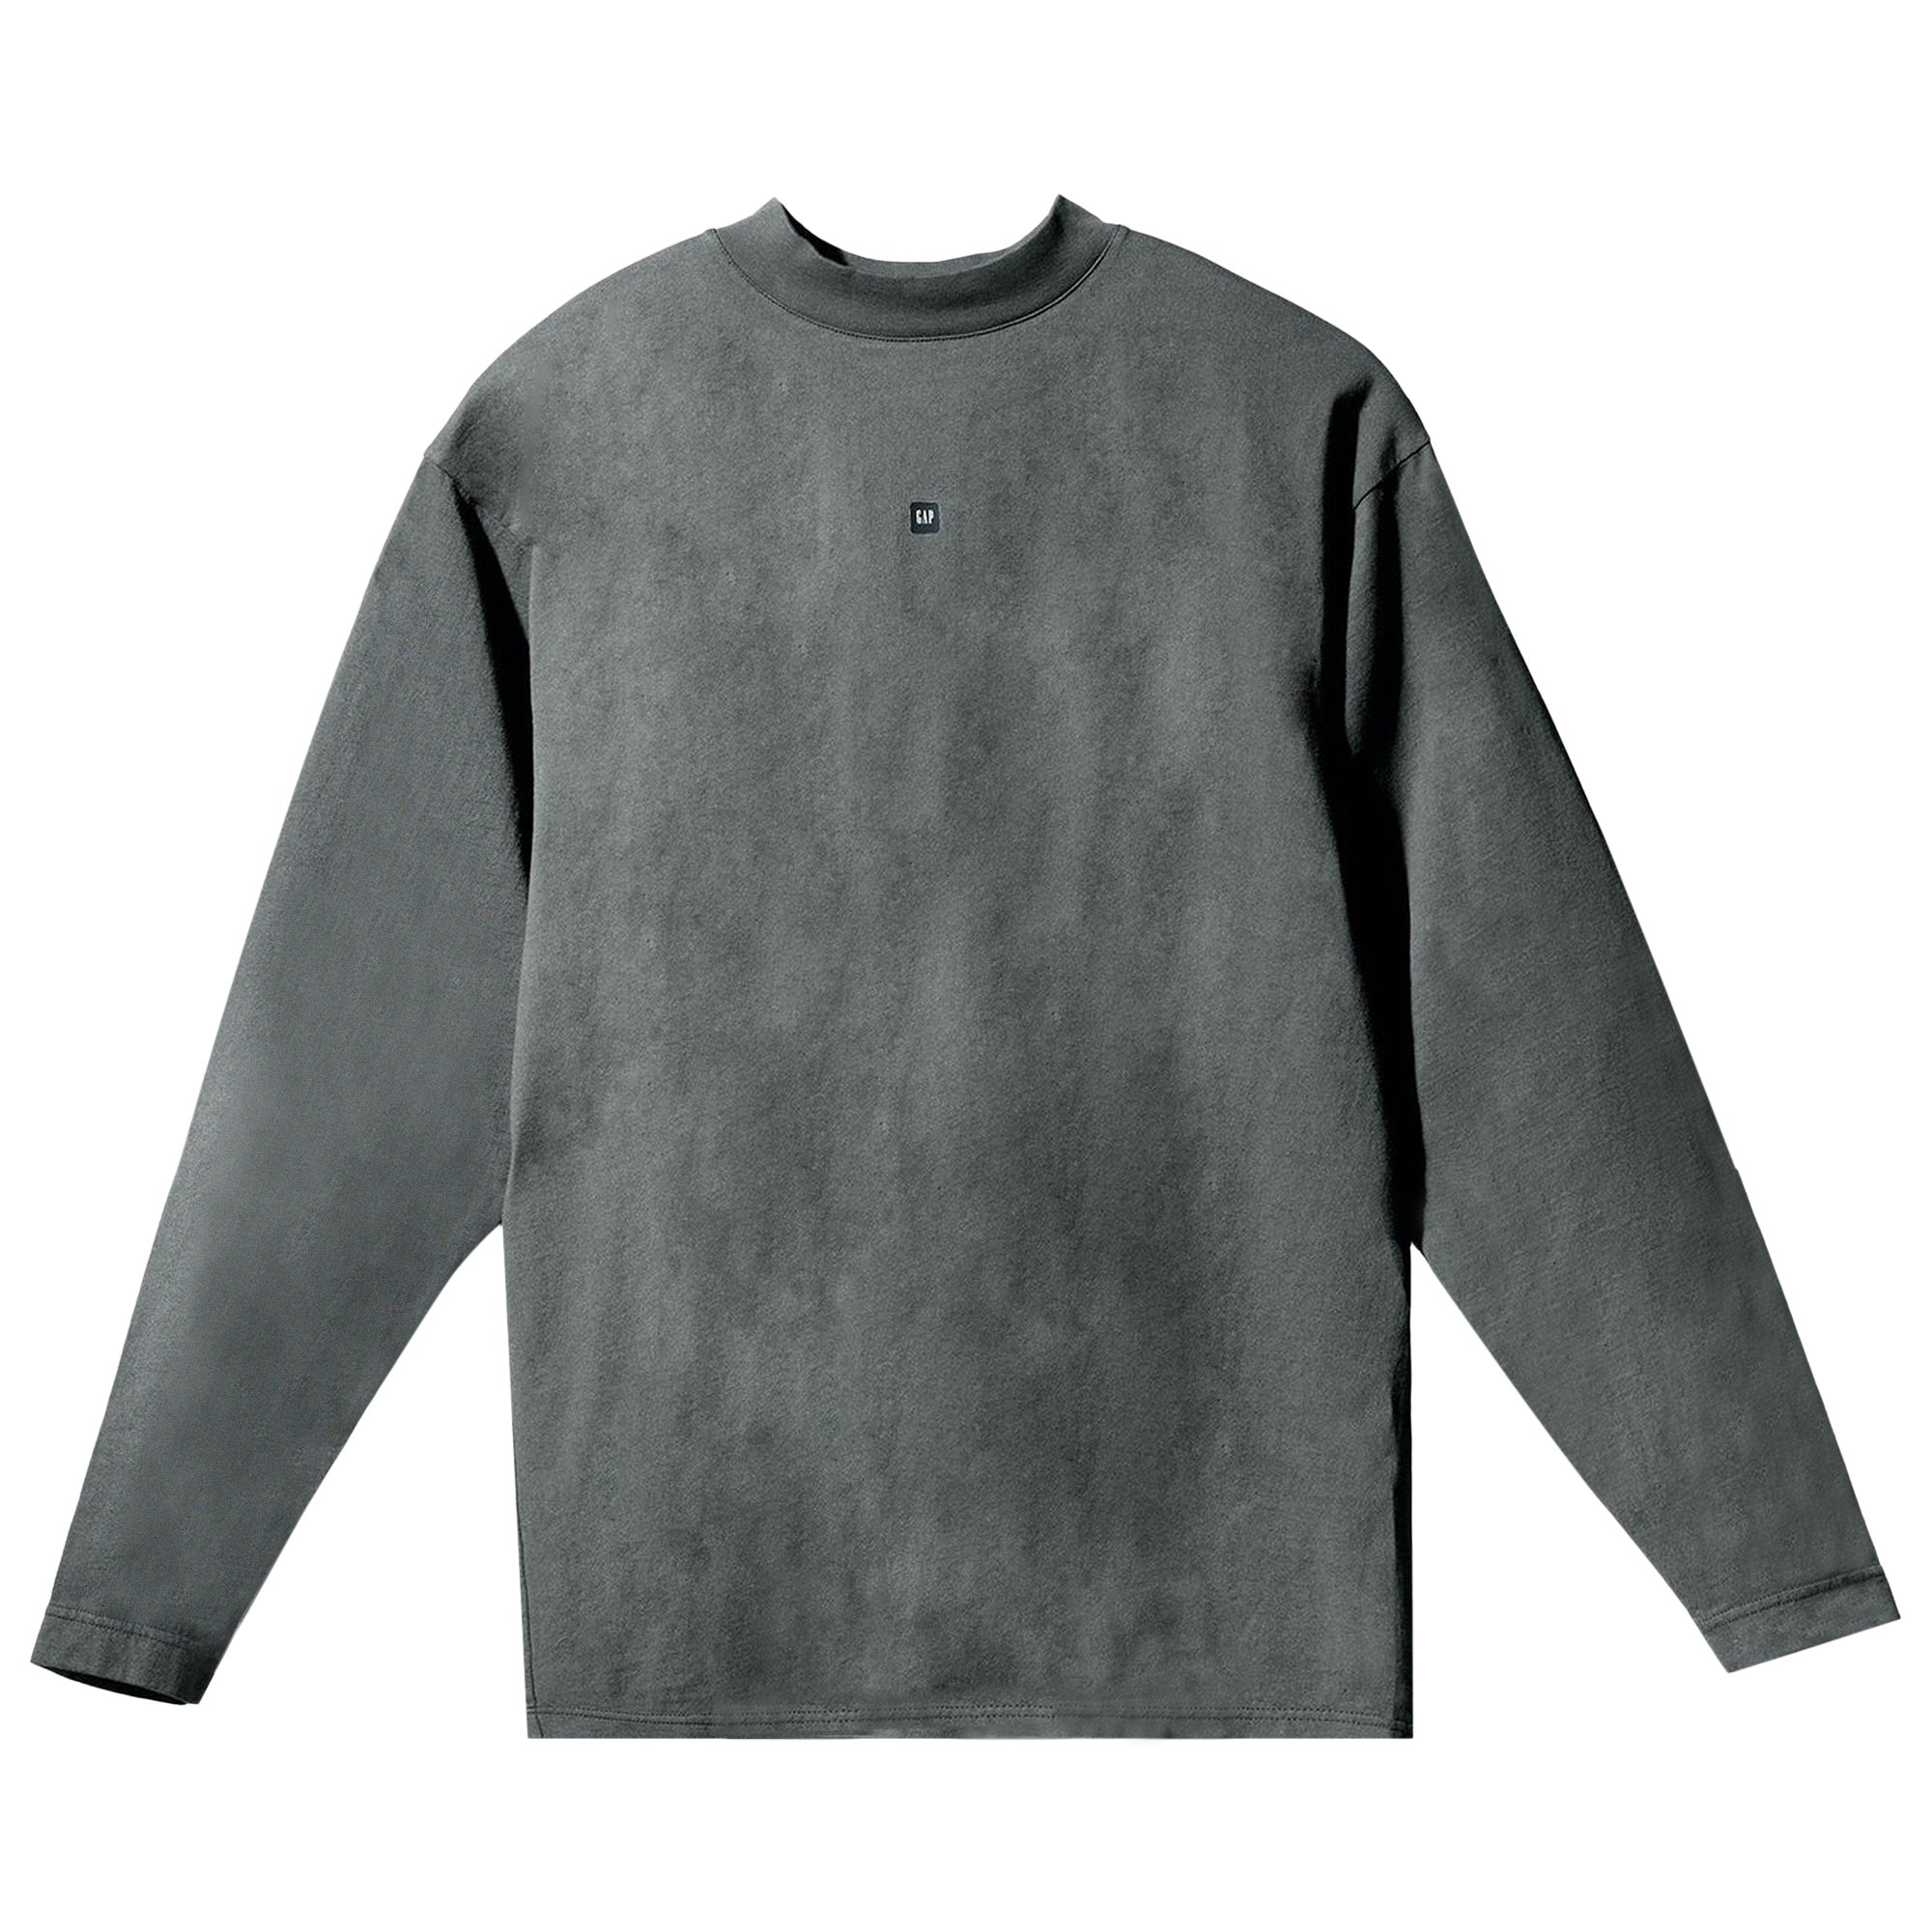 Yeezy x Gap Long Sleeve T-shirt Black